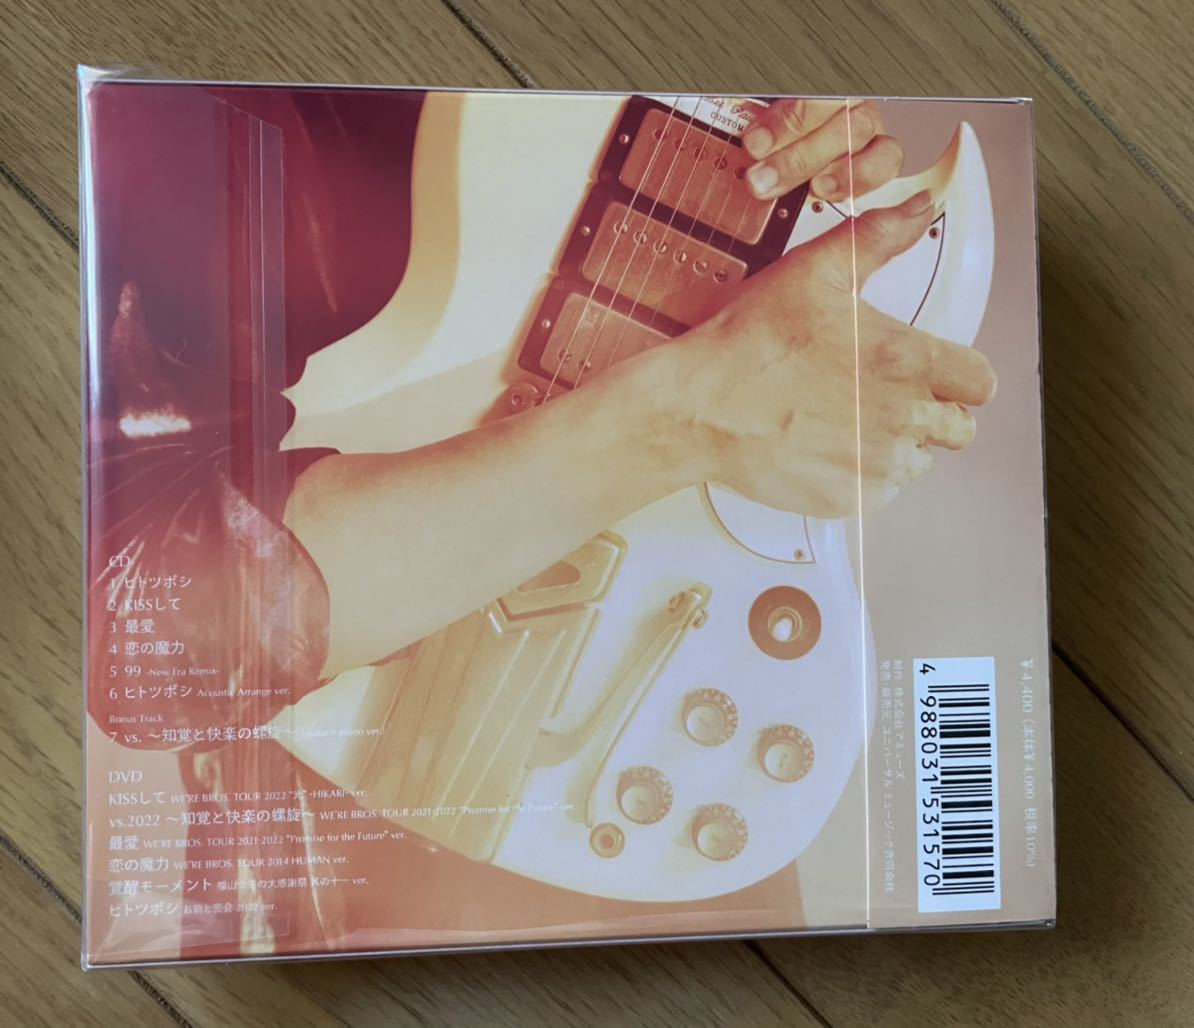 KOH+ ヒトツボシCD+DVD ガリレ 福山雅治 柴咲コウ BROS限定 ファン 